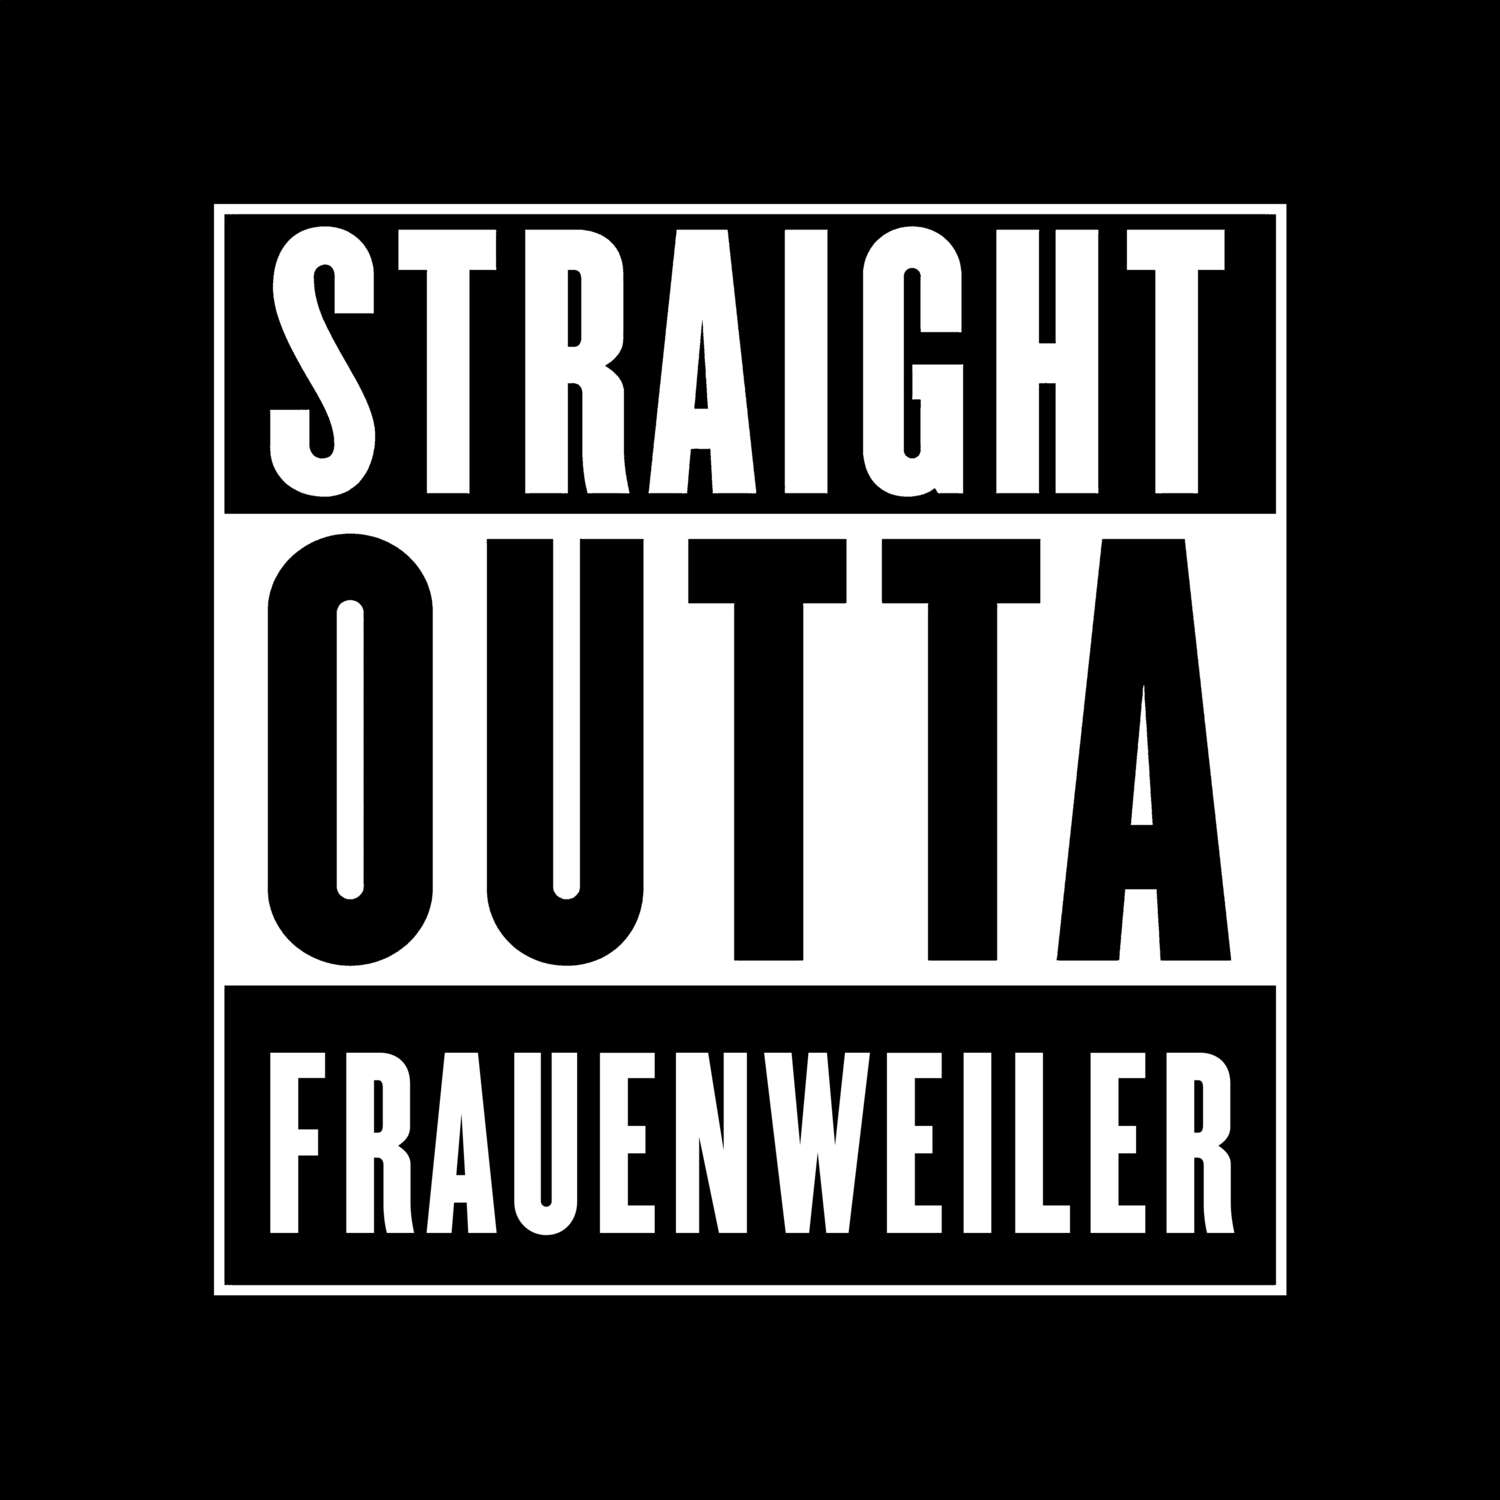 Frauenweiler T-Shirt »Straight Outta«